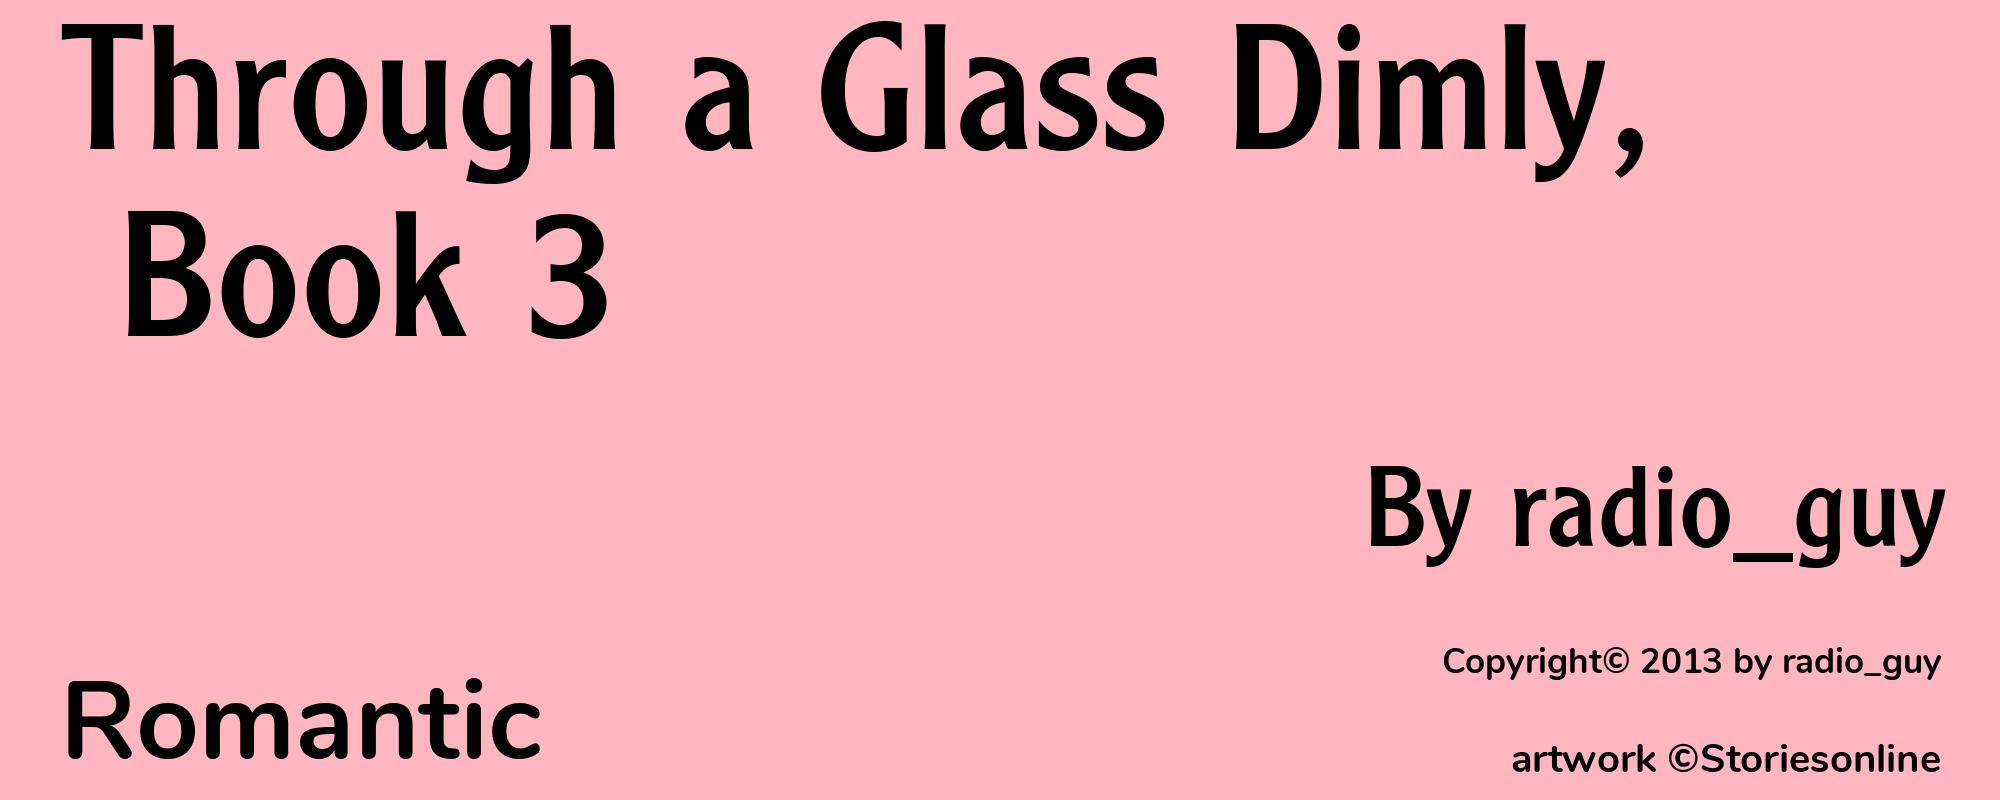 Through a Glass Dimly, Book 3 - Cover